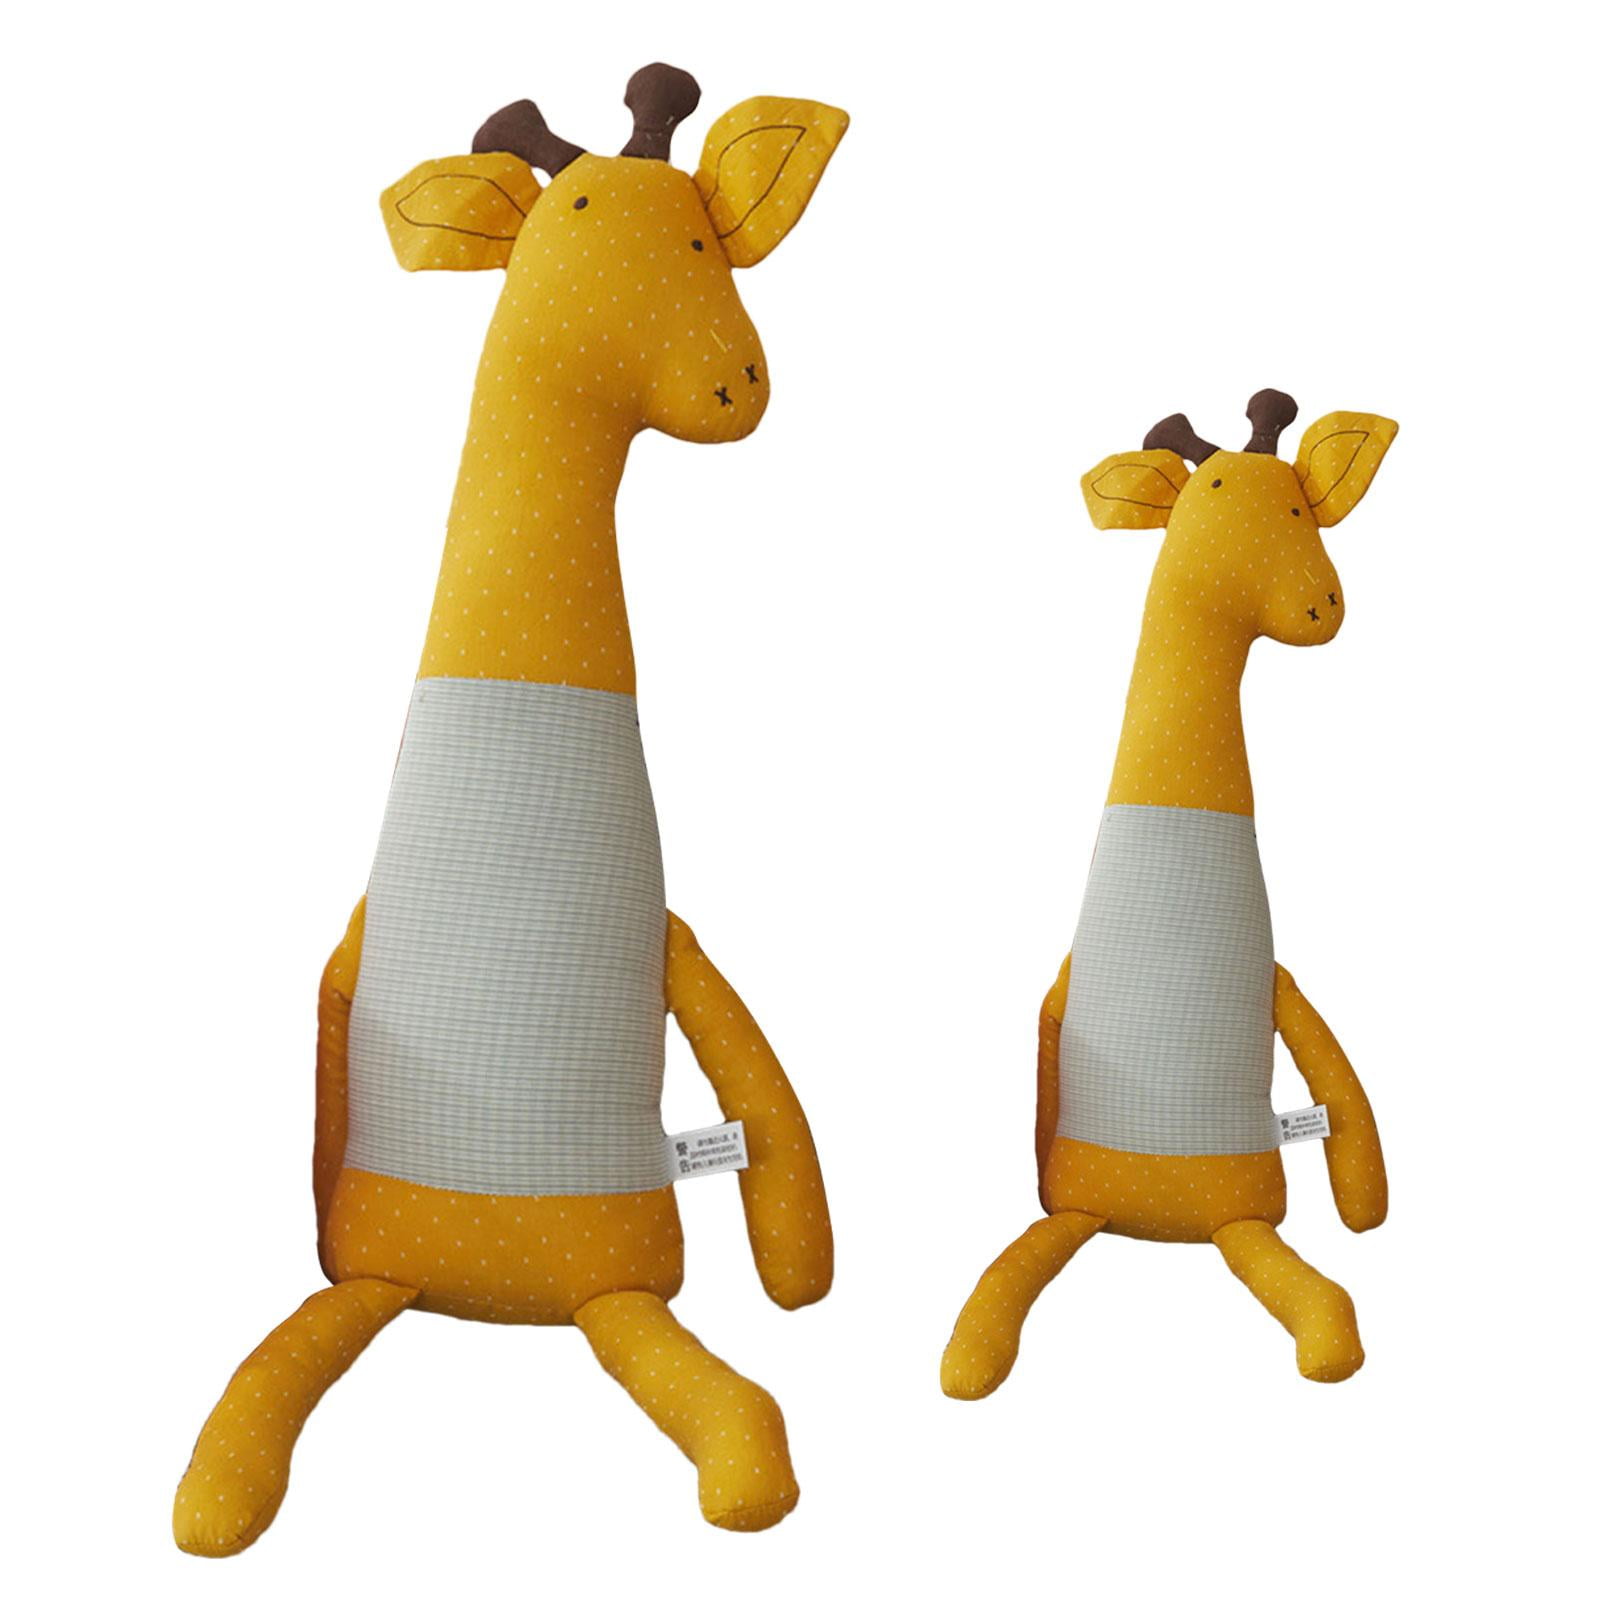 MEGAWHEELS Giraffe Stuffed Animal |Giant Giraffe Lively Stuffed Animal|Mom  & Baby Giraffe Plush,Stuffed Animal,Plush Toy,Gifts for Kids,Zoo Animals -  